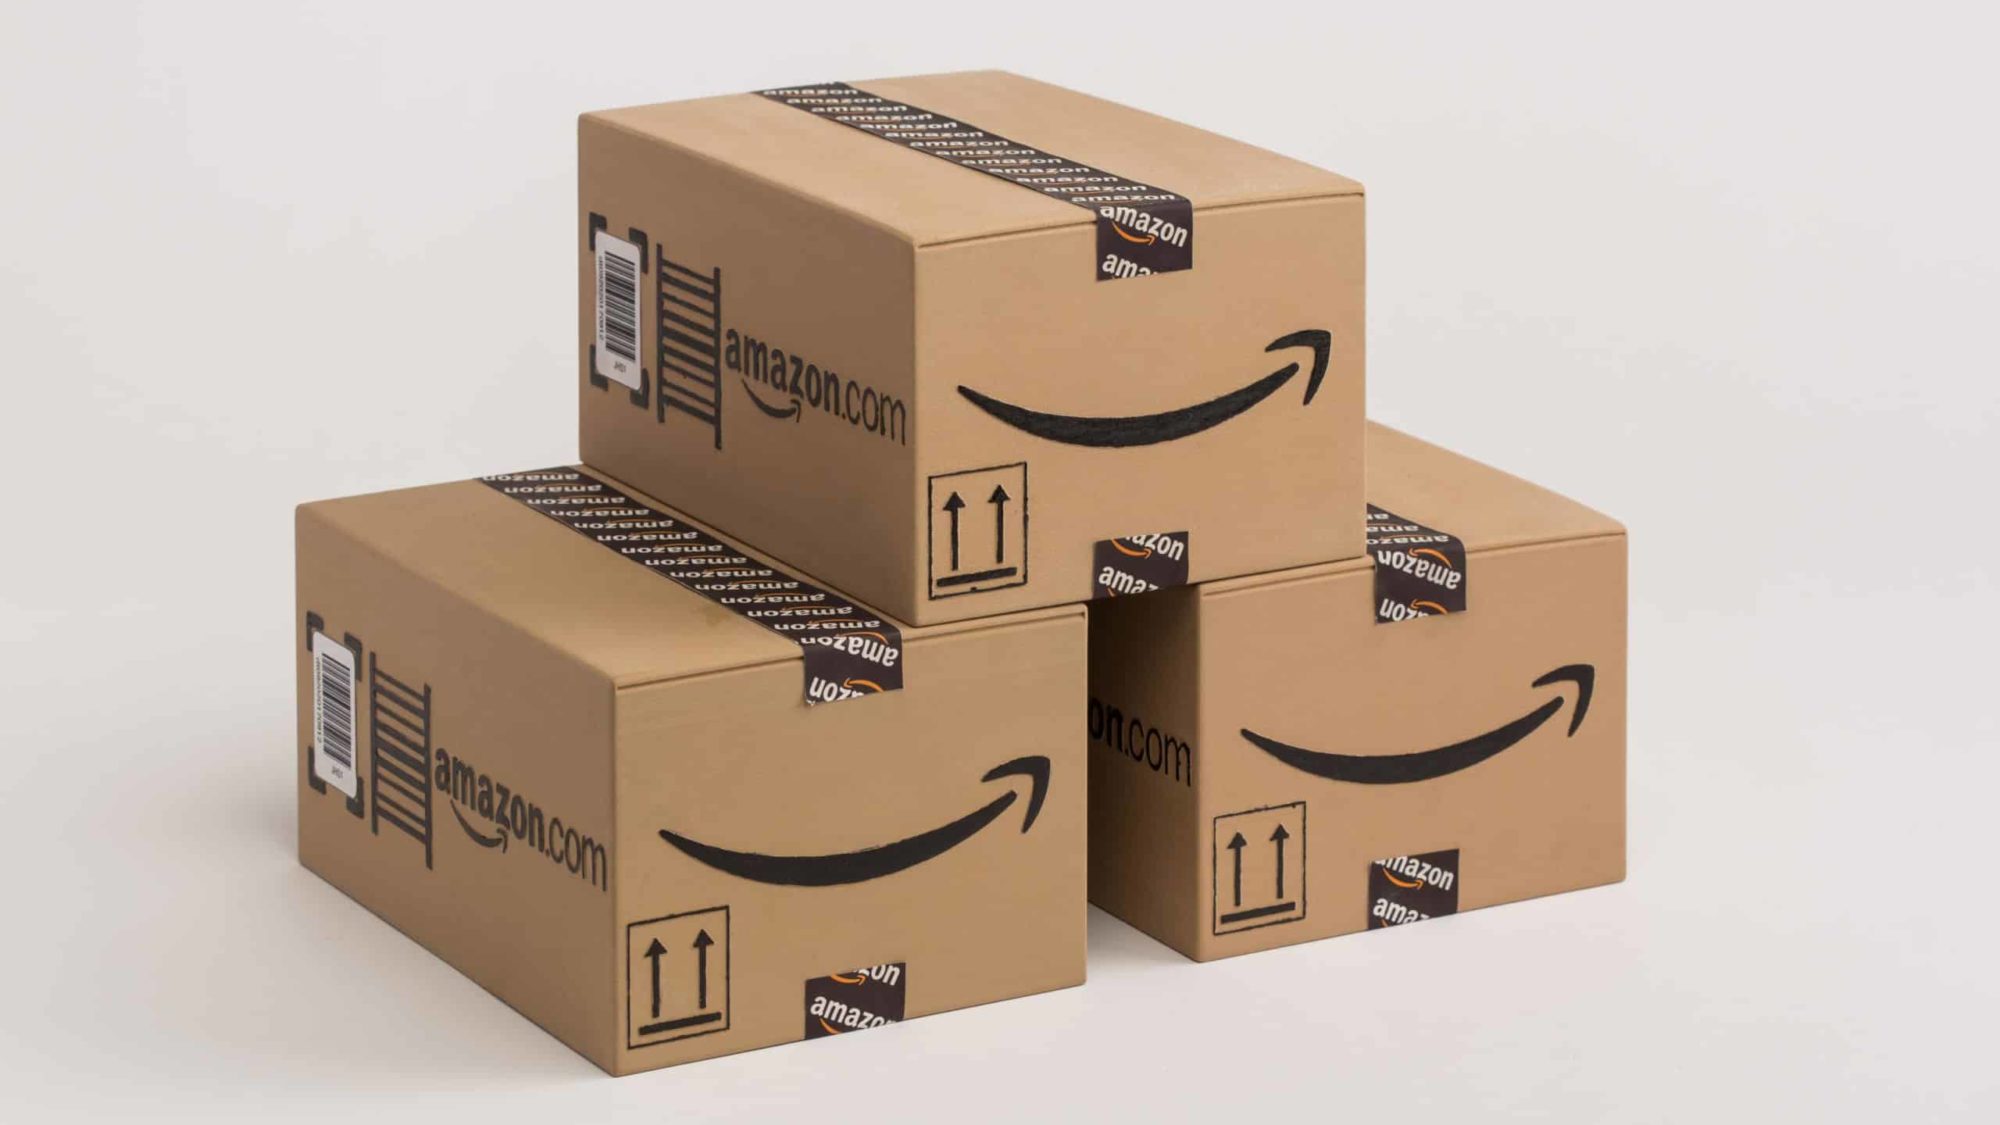 Amazon posts record Q3